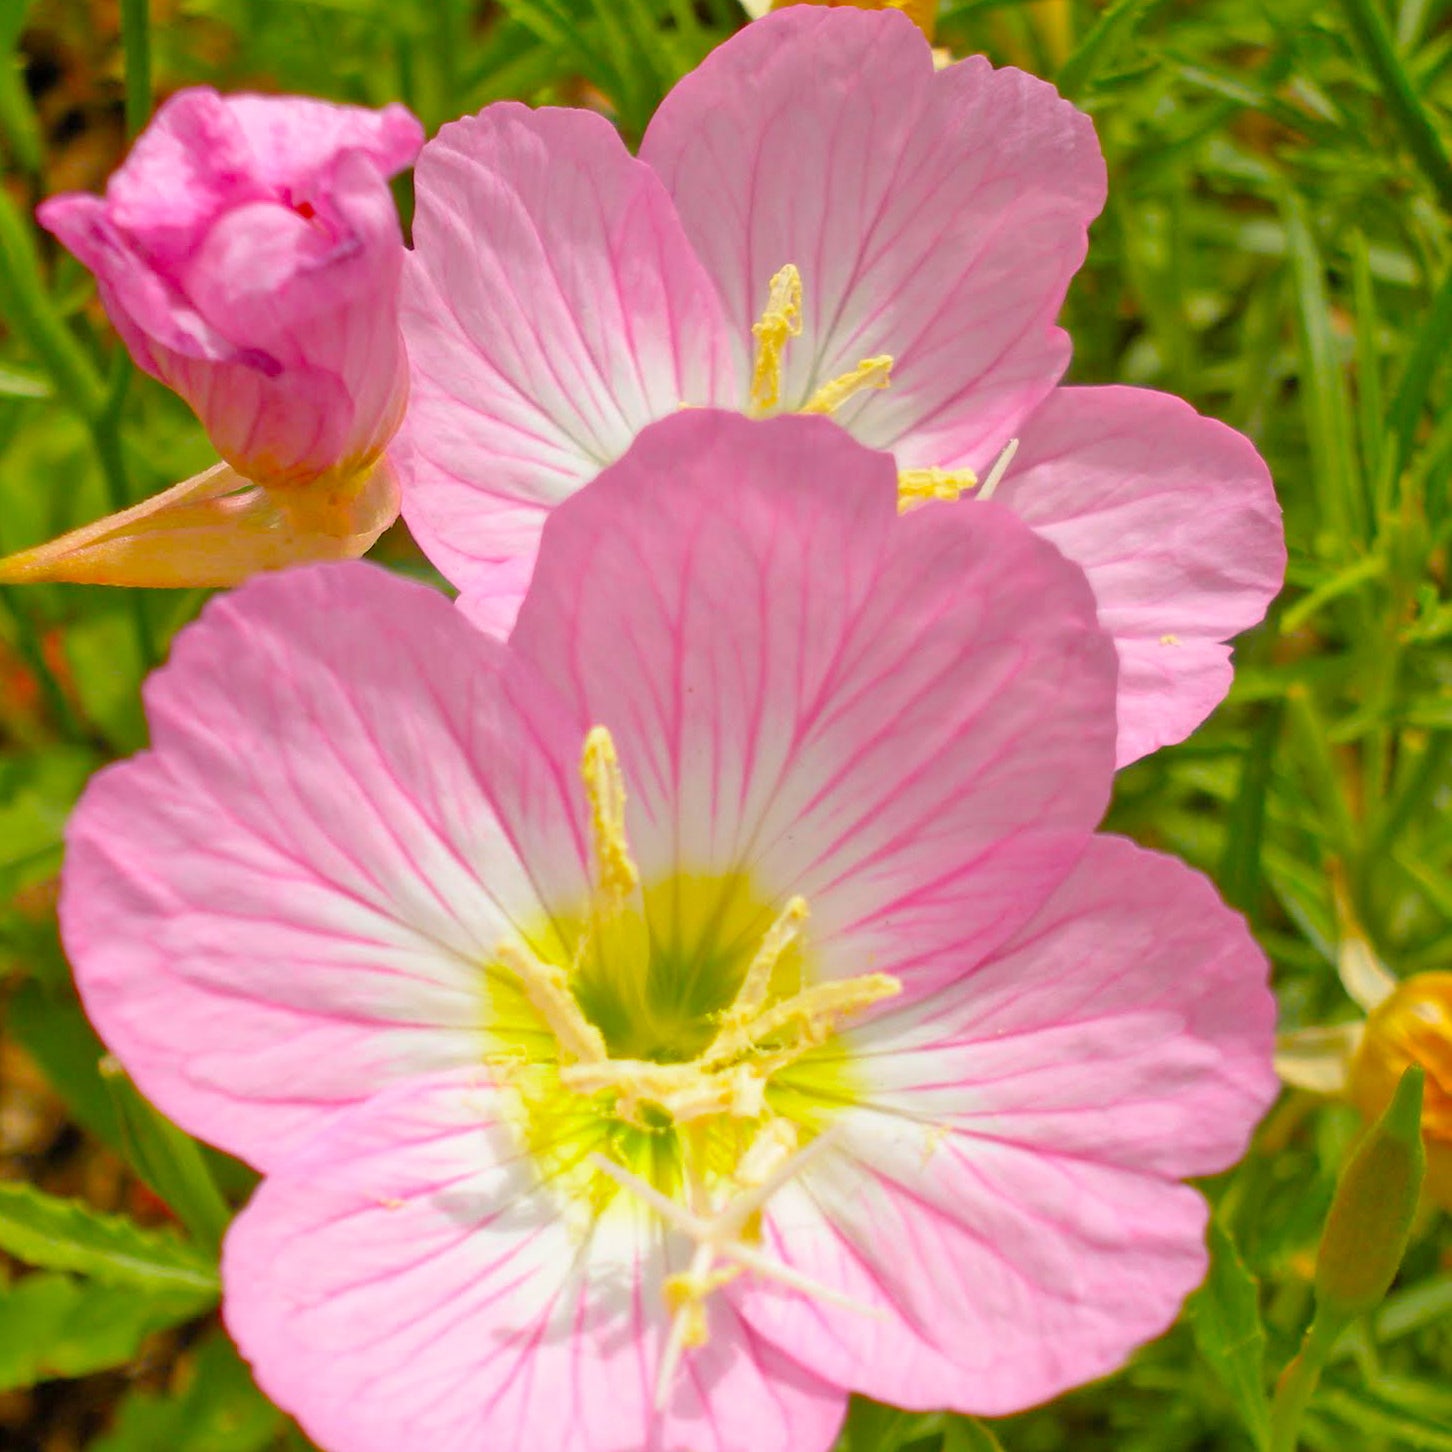 Primrose flowers in the Georgia wildflower seed mix